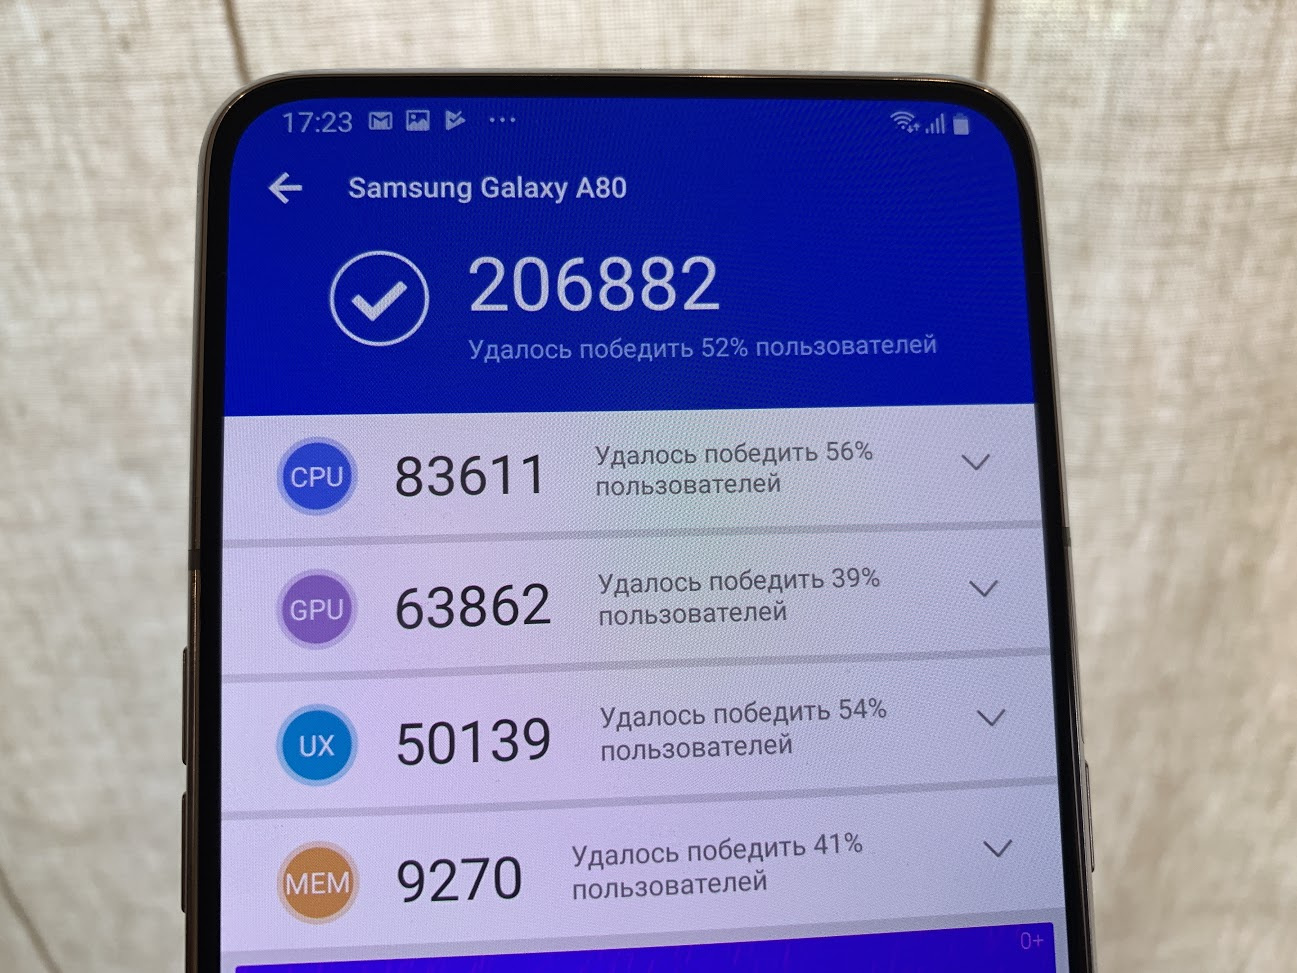 Samsung Galaxy A22 Антуту